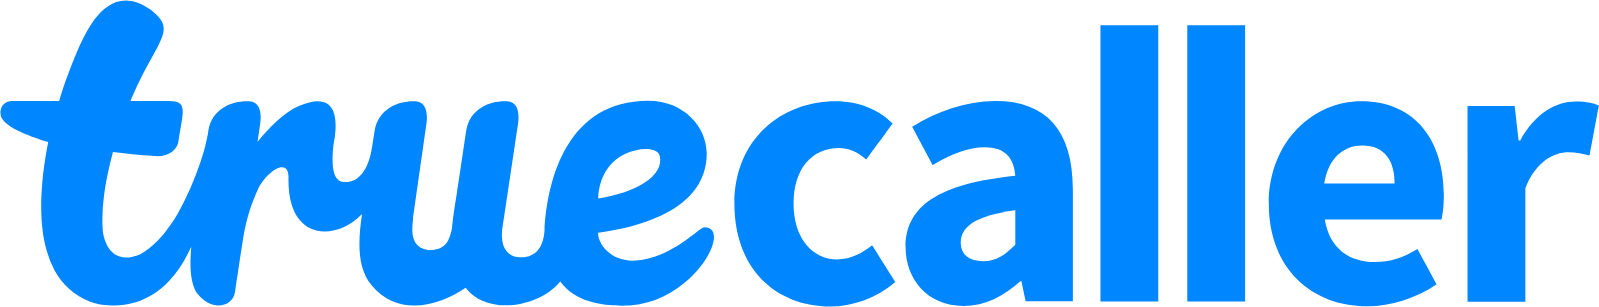 Truecaller logo large (transparent PNG)